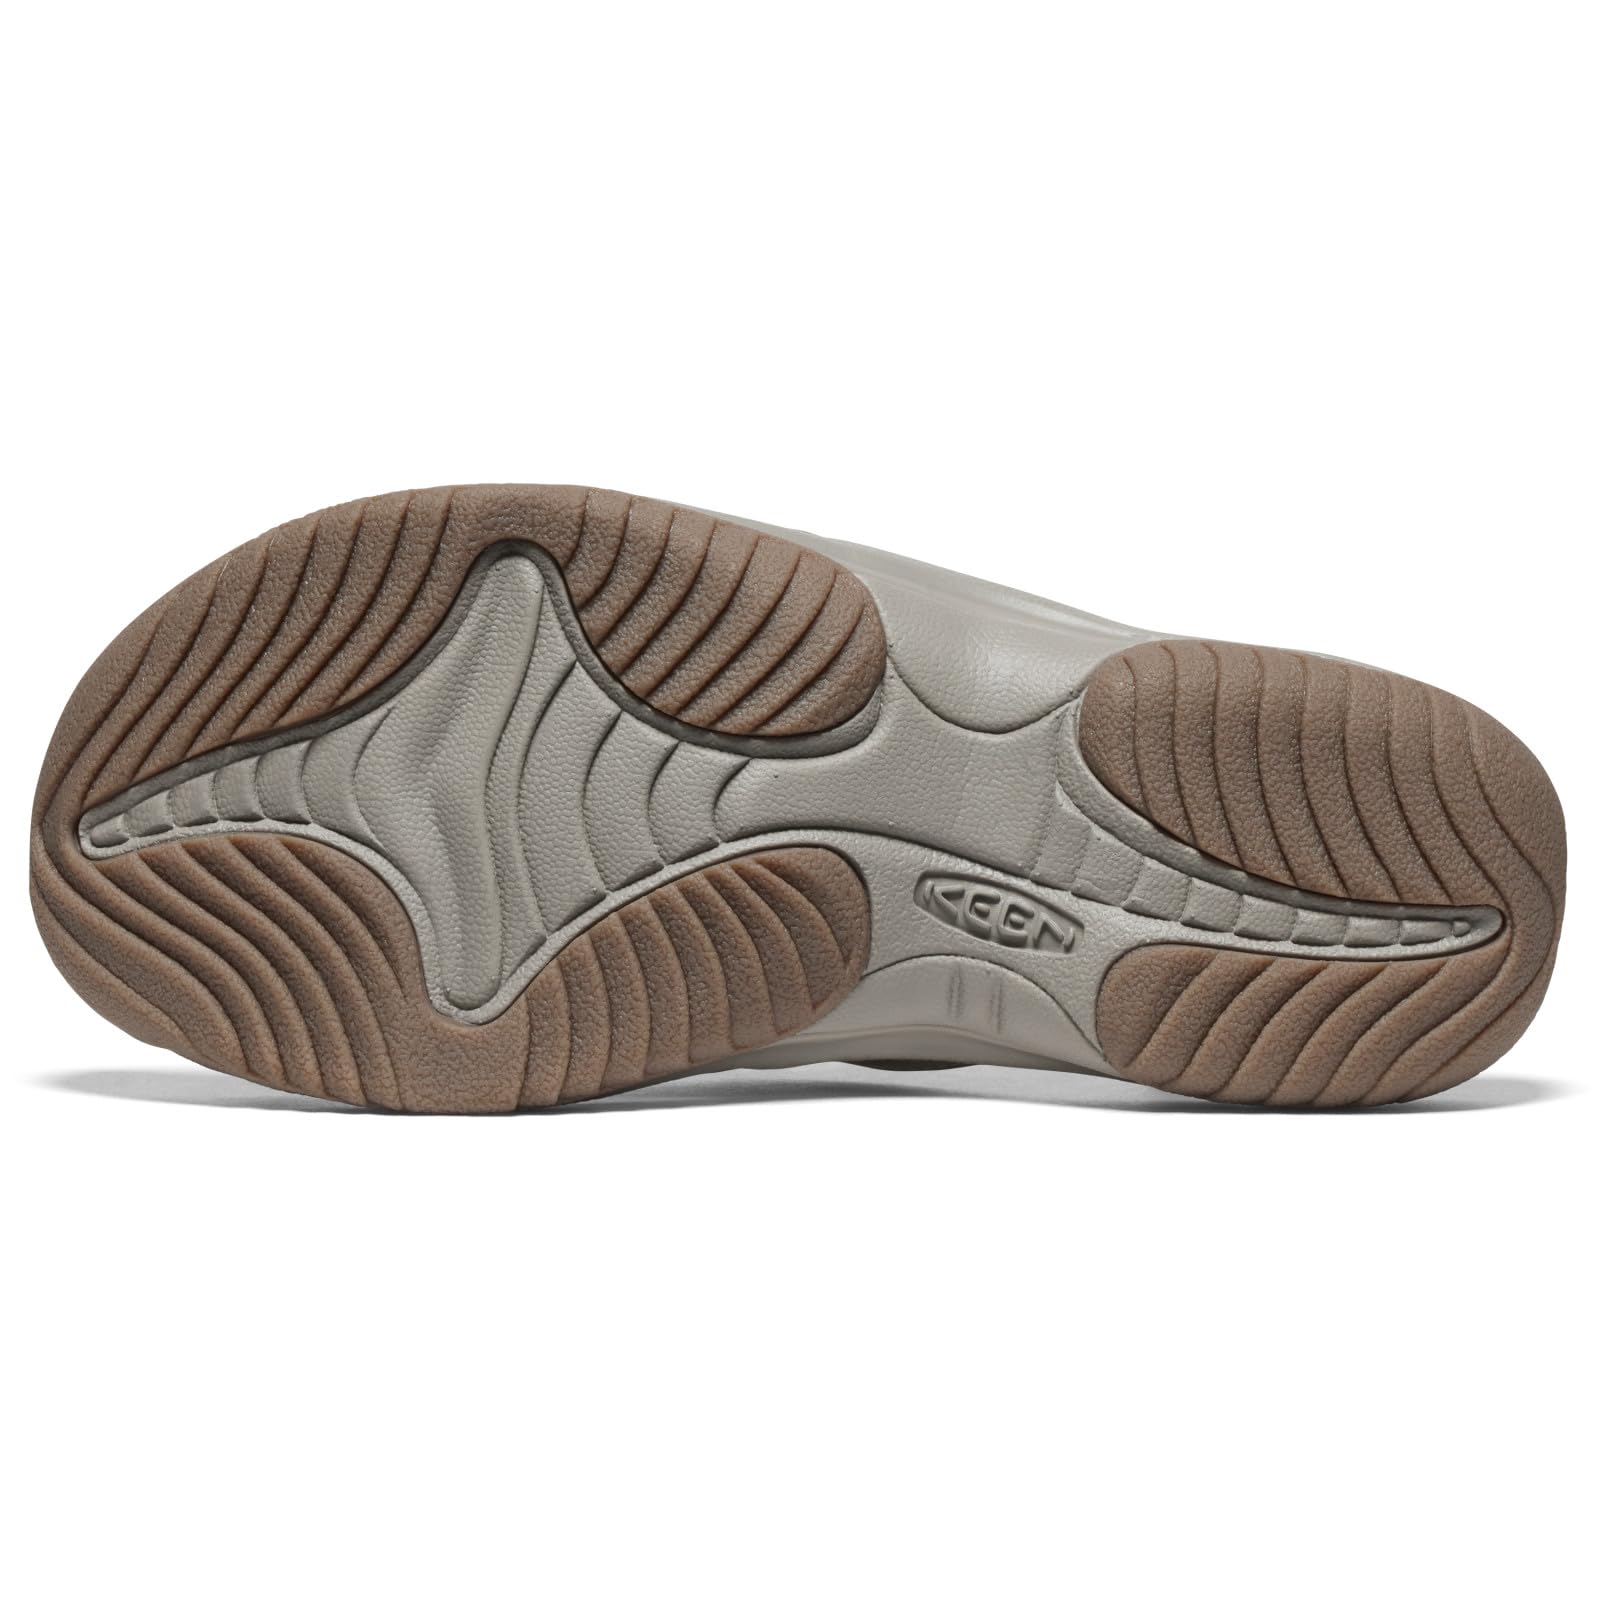 KEEN Men's Waimea H2 Toe Protecting Flip-Flops, Brindle/Birch, 11